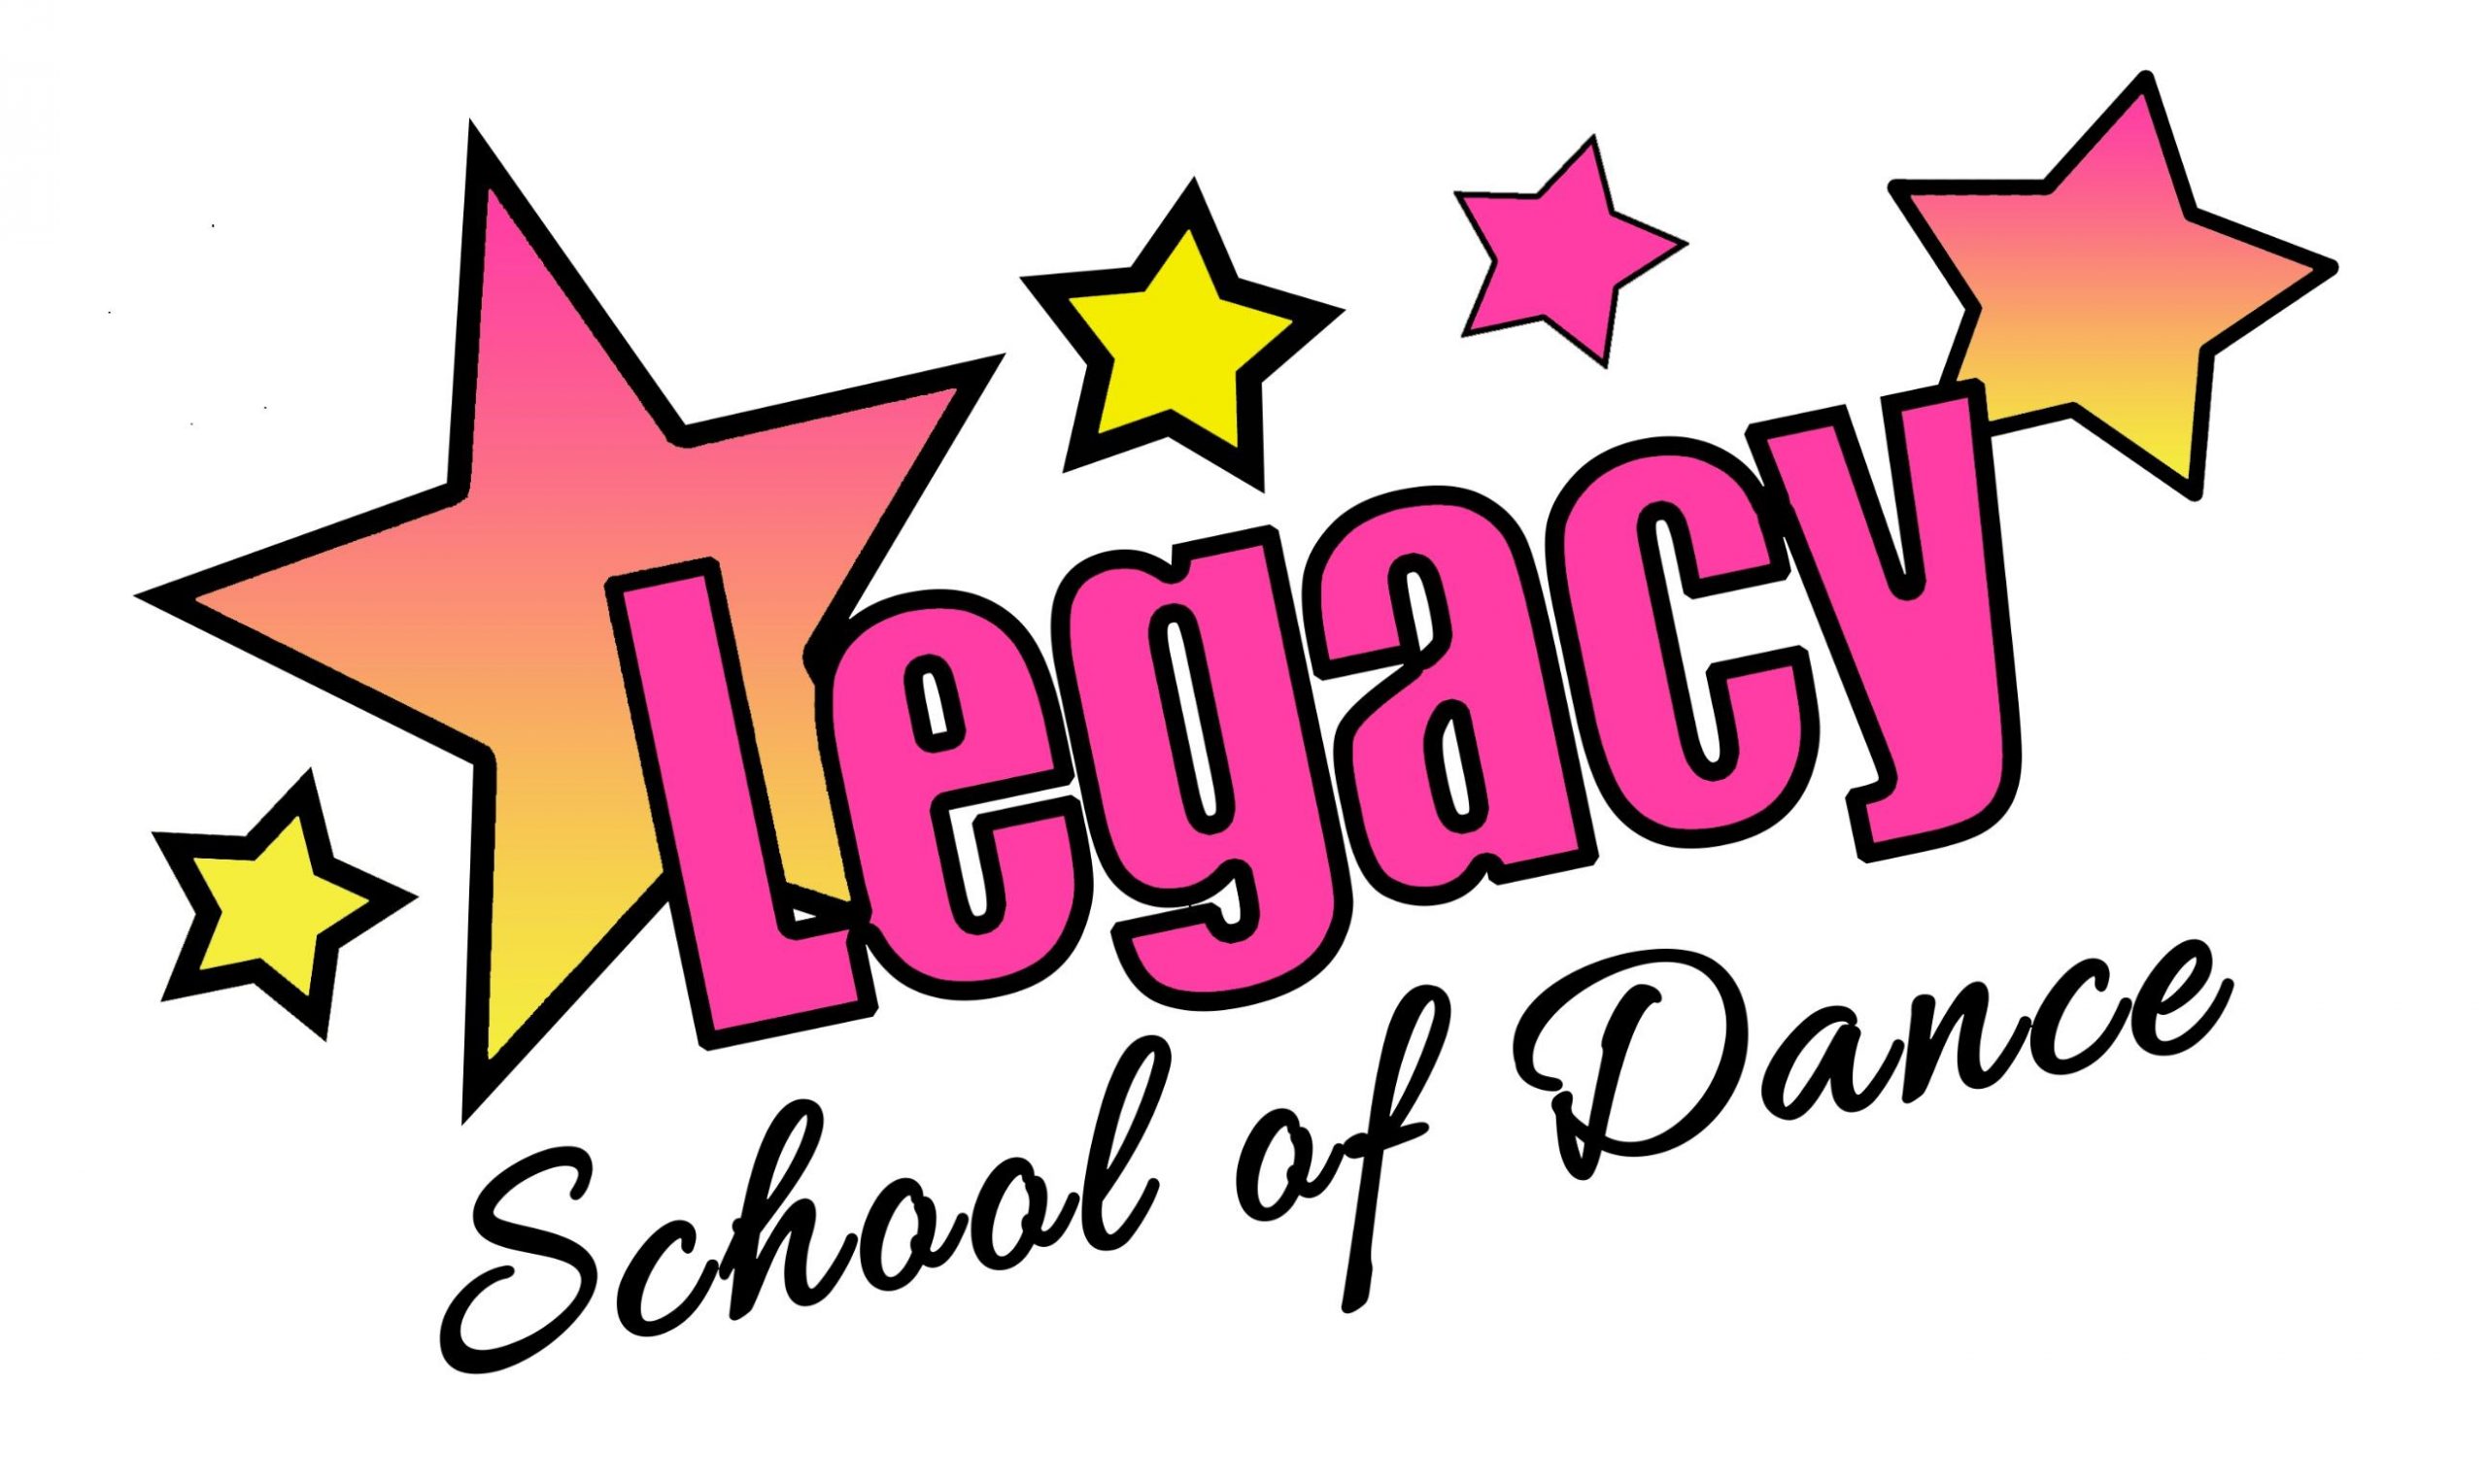 Legacy School of Dance